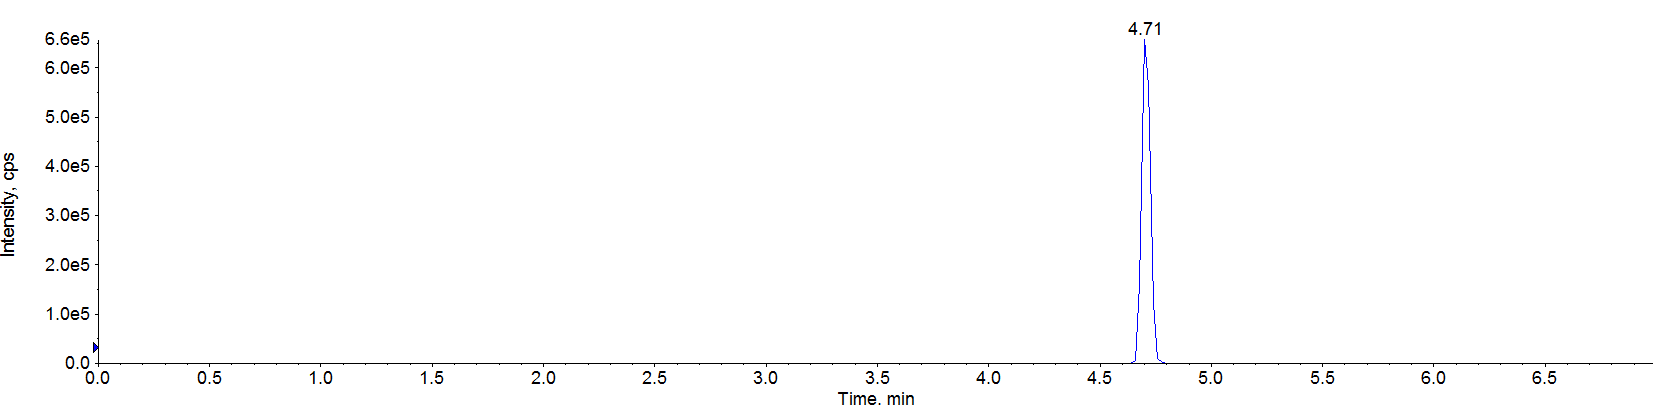 Chromatogram of triforine standard(0.1 mg/L).